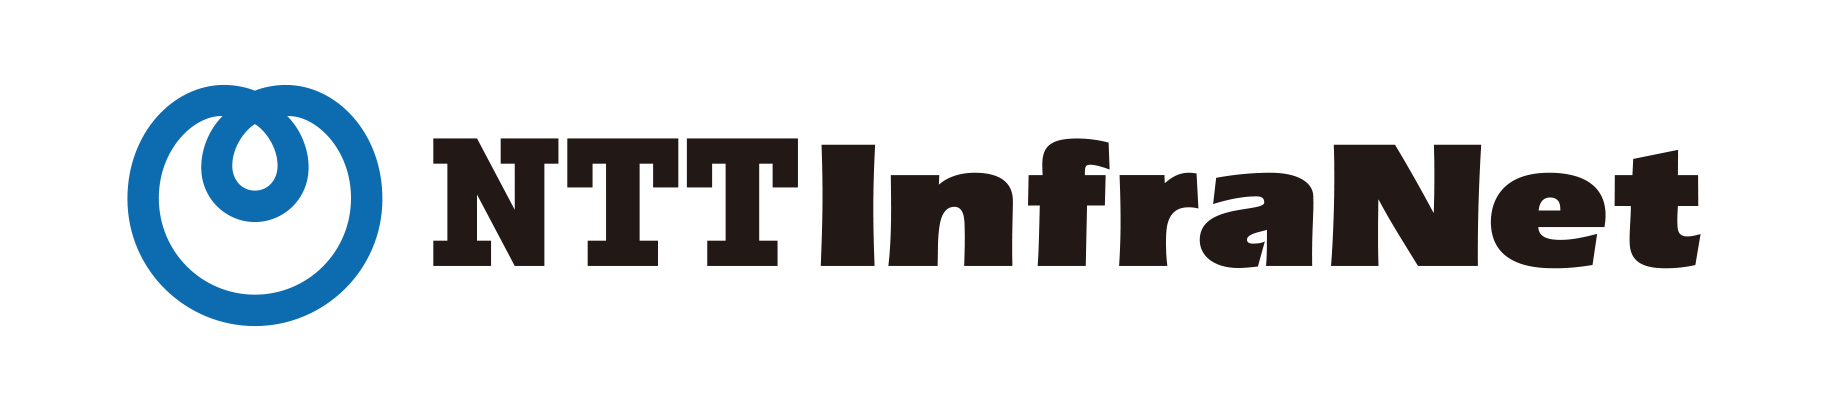 nttInfraNet_logo.png